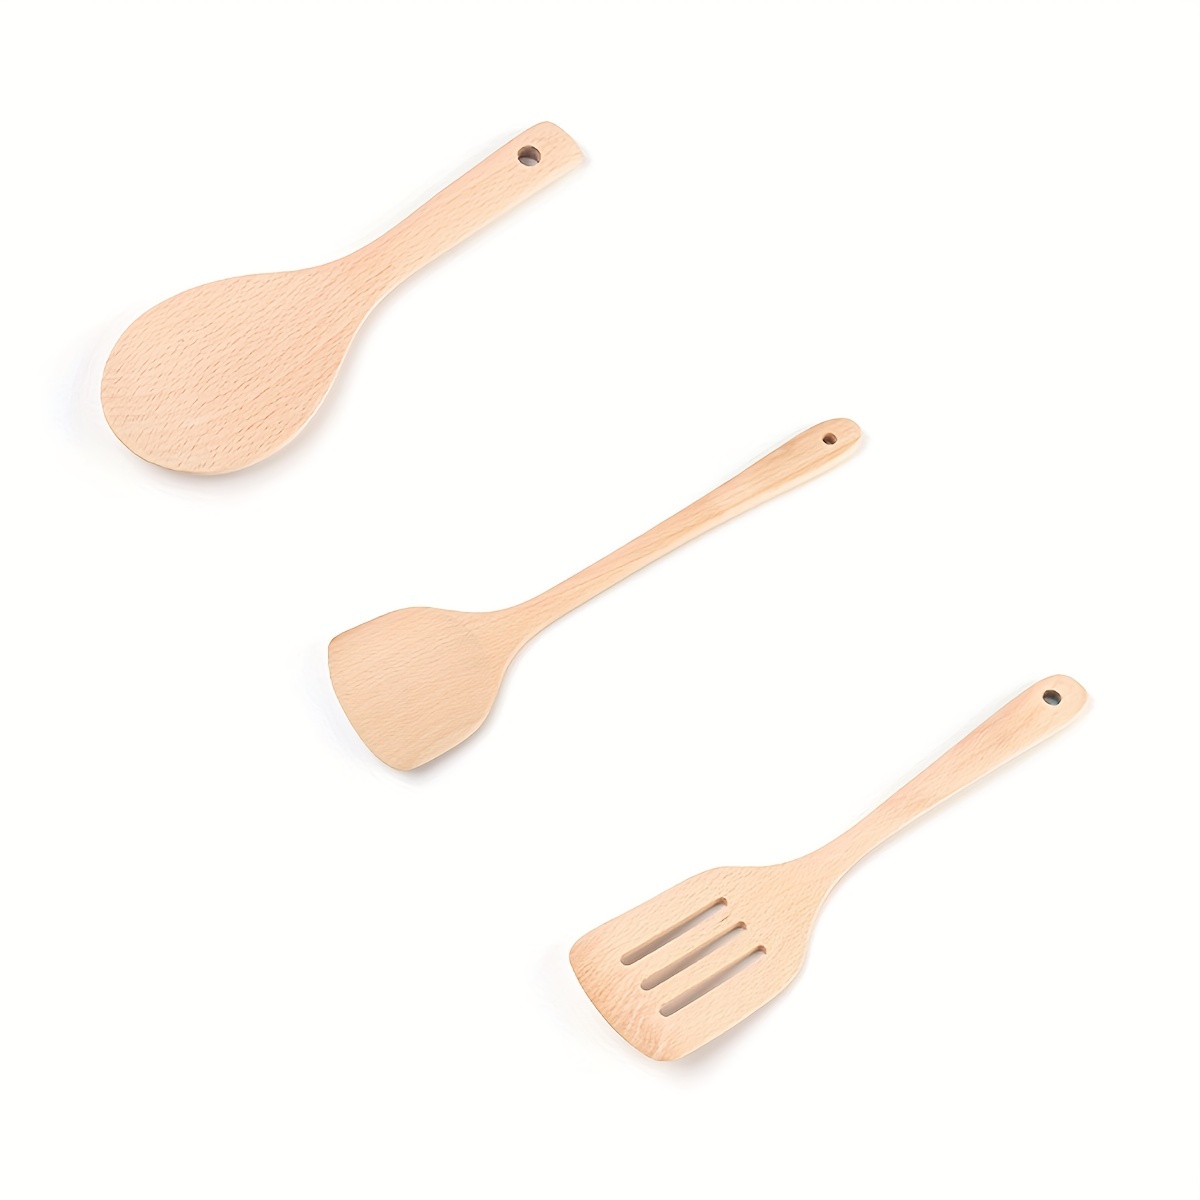 Spatula/Spoon Set - Beech Wood